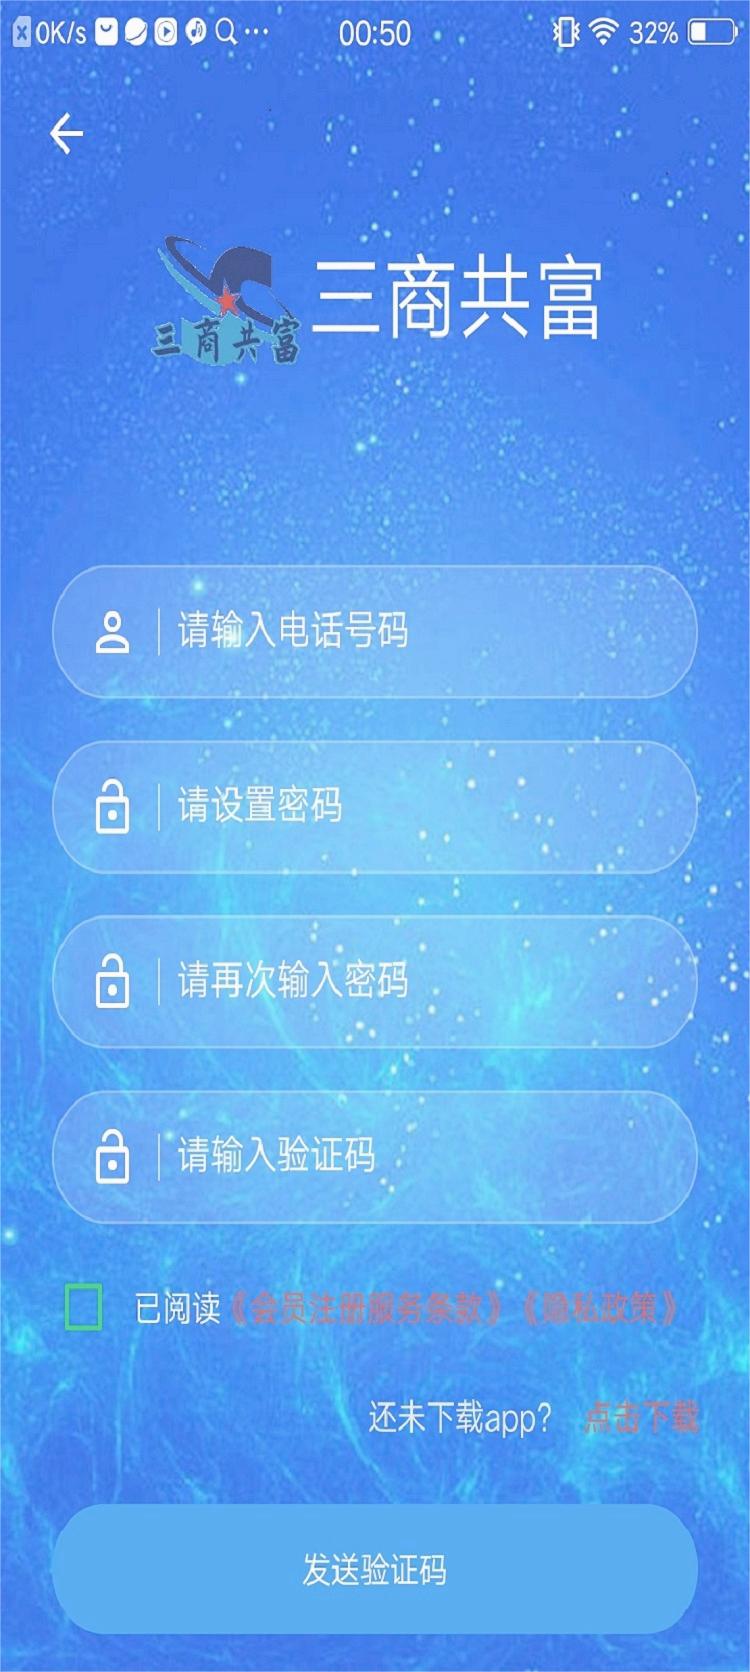 三商共富appv3.1.139